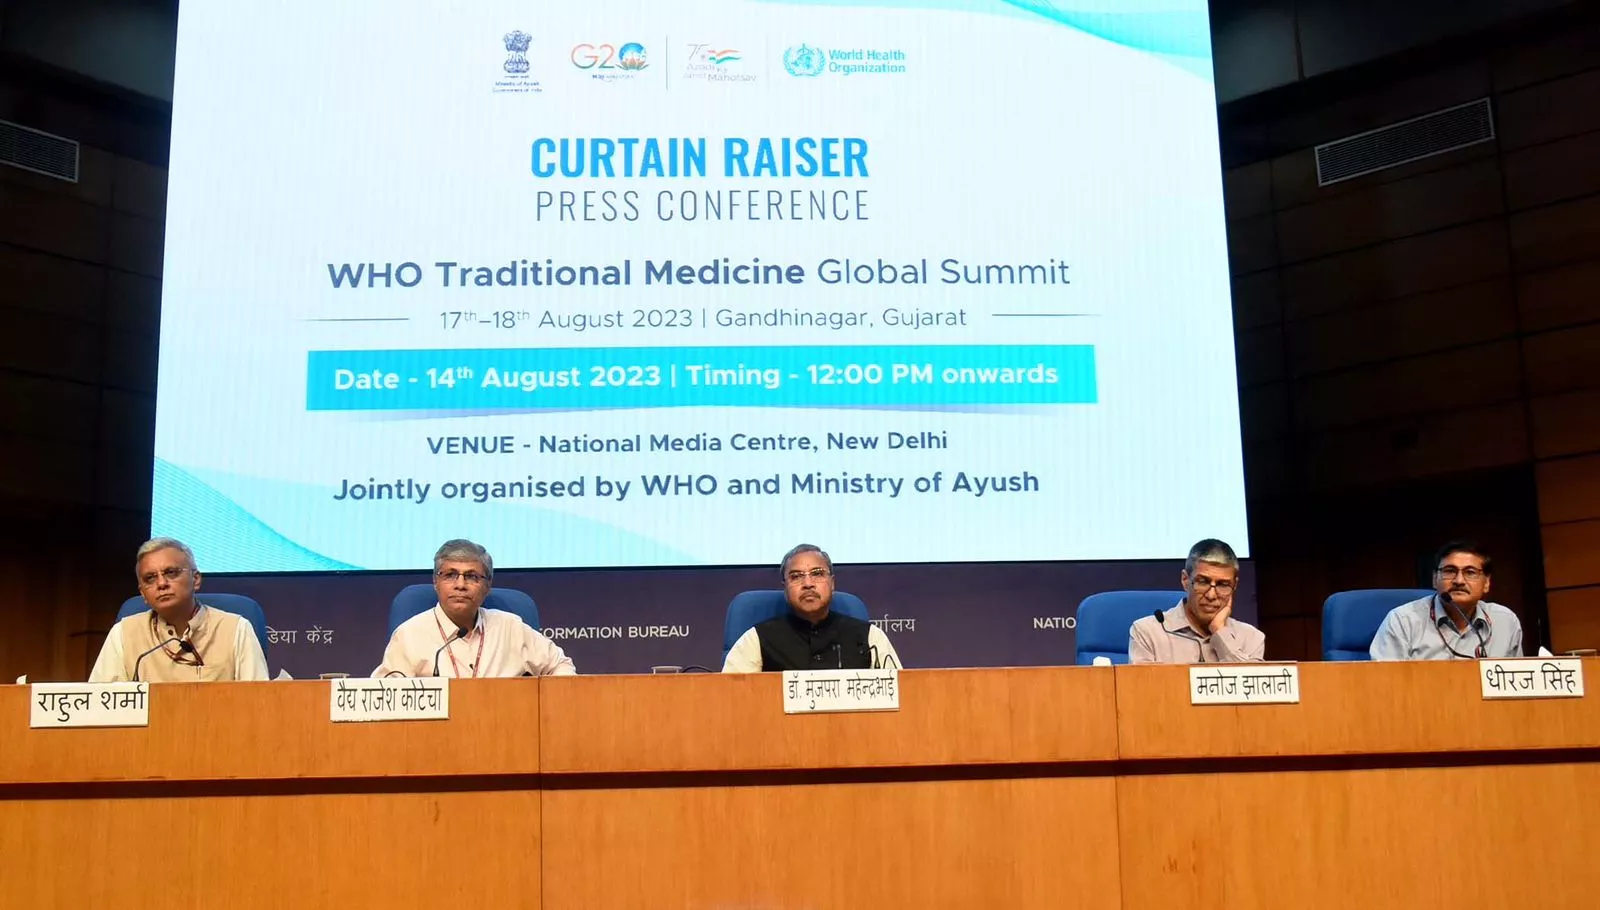 First-ever Global Summit on Traditional Medicine: عالمی صحت کی تنظیم اور وزارت آیوش روایتی ادویات پر پہلے عالمی سربراہی اجلاس کی میزبانی کریں گی